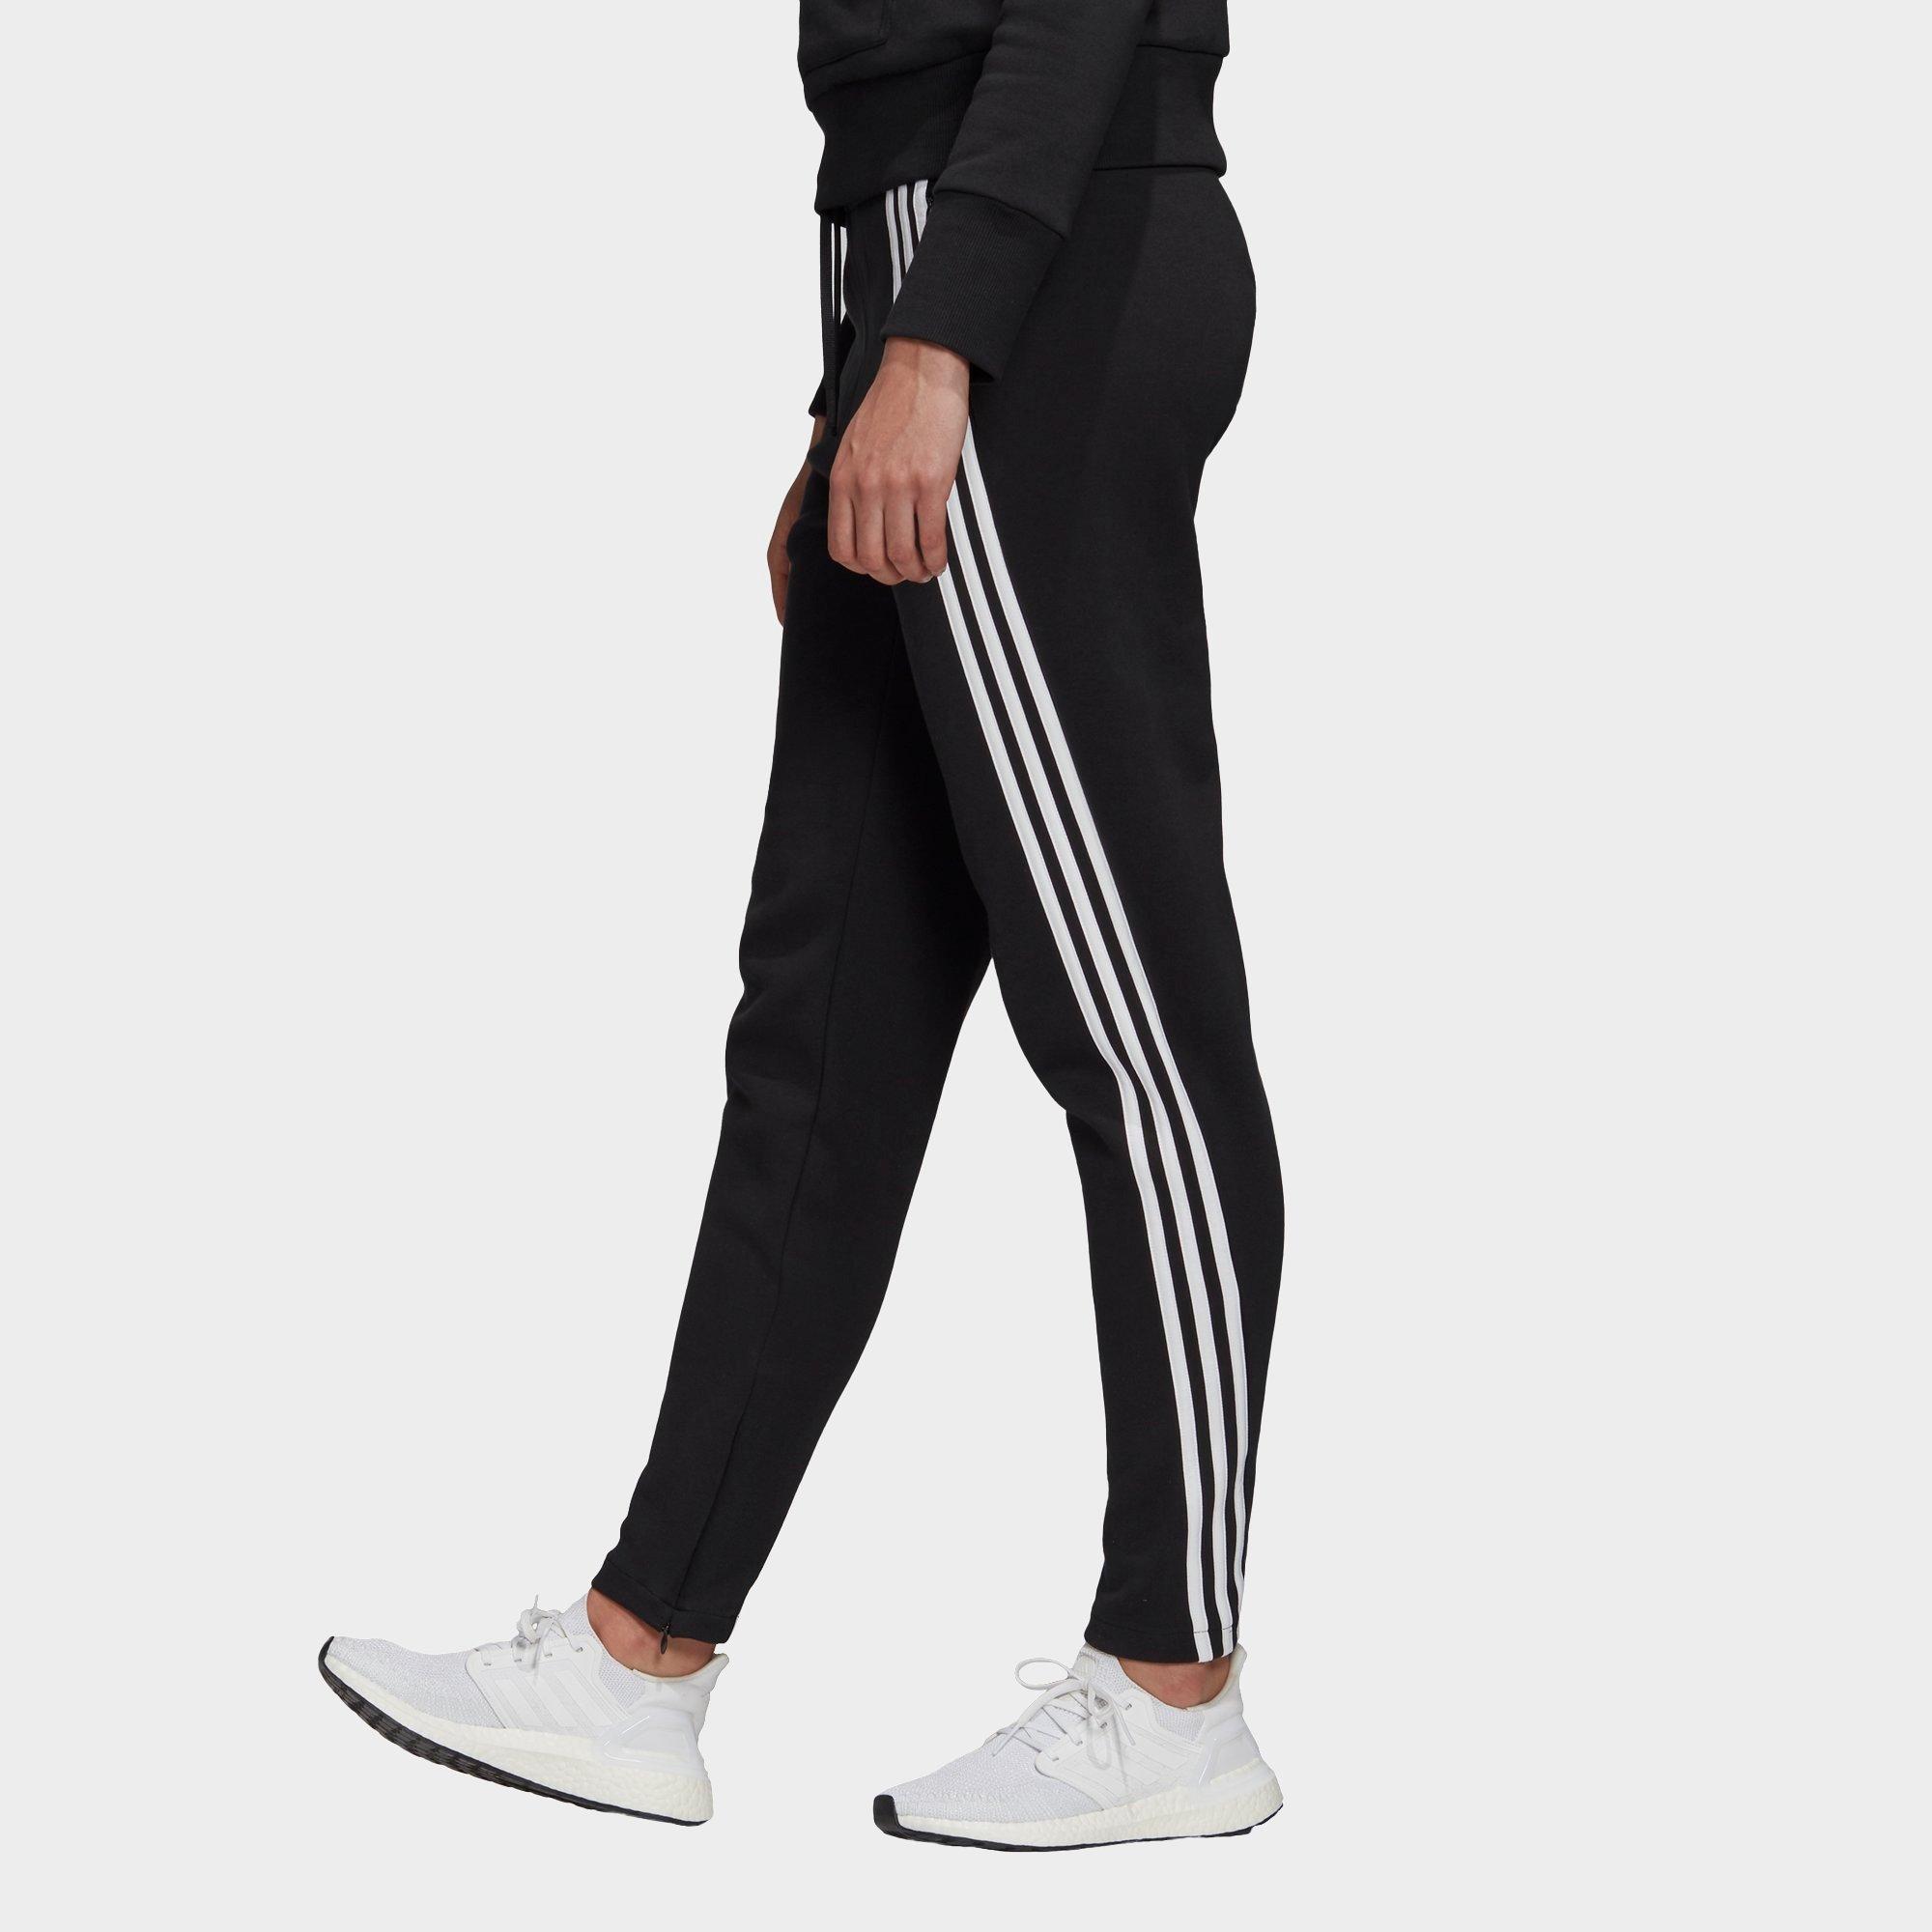 adidas women's pants with zipper